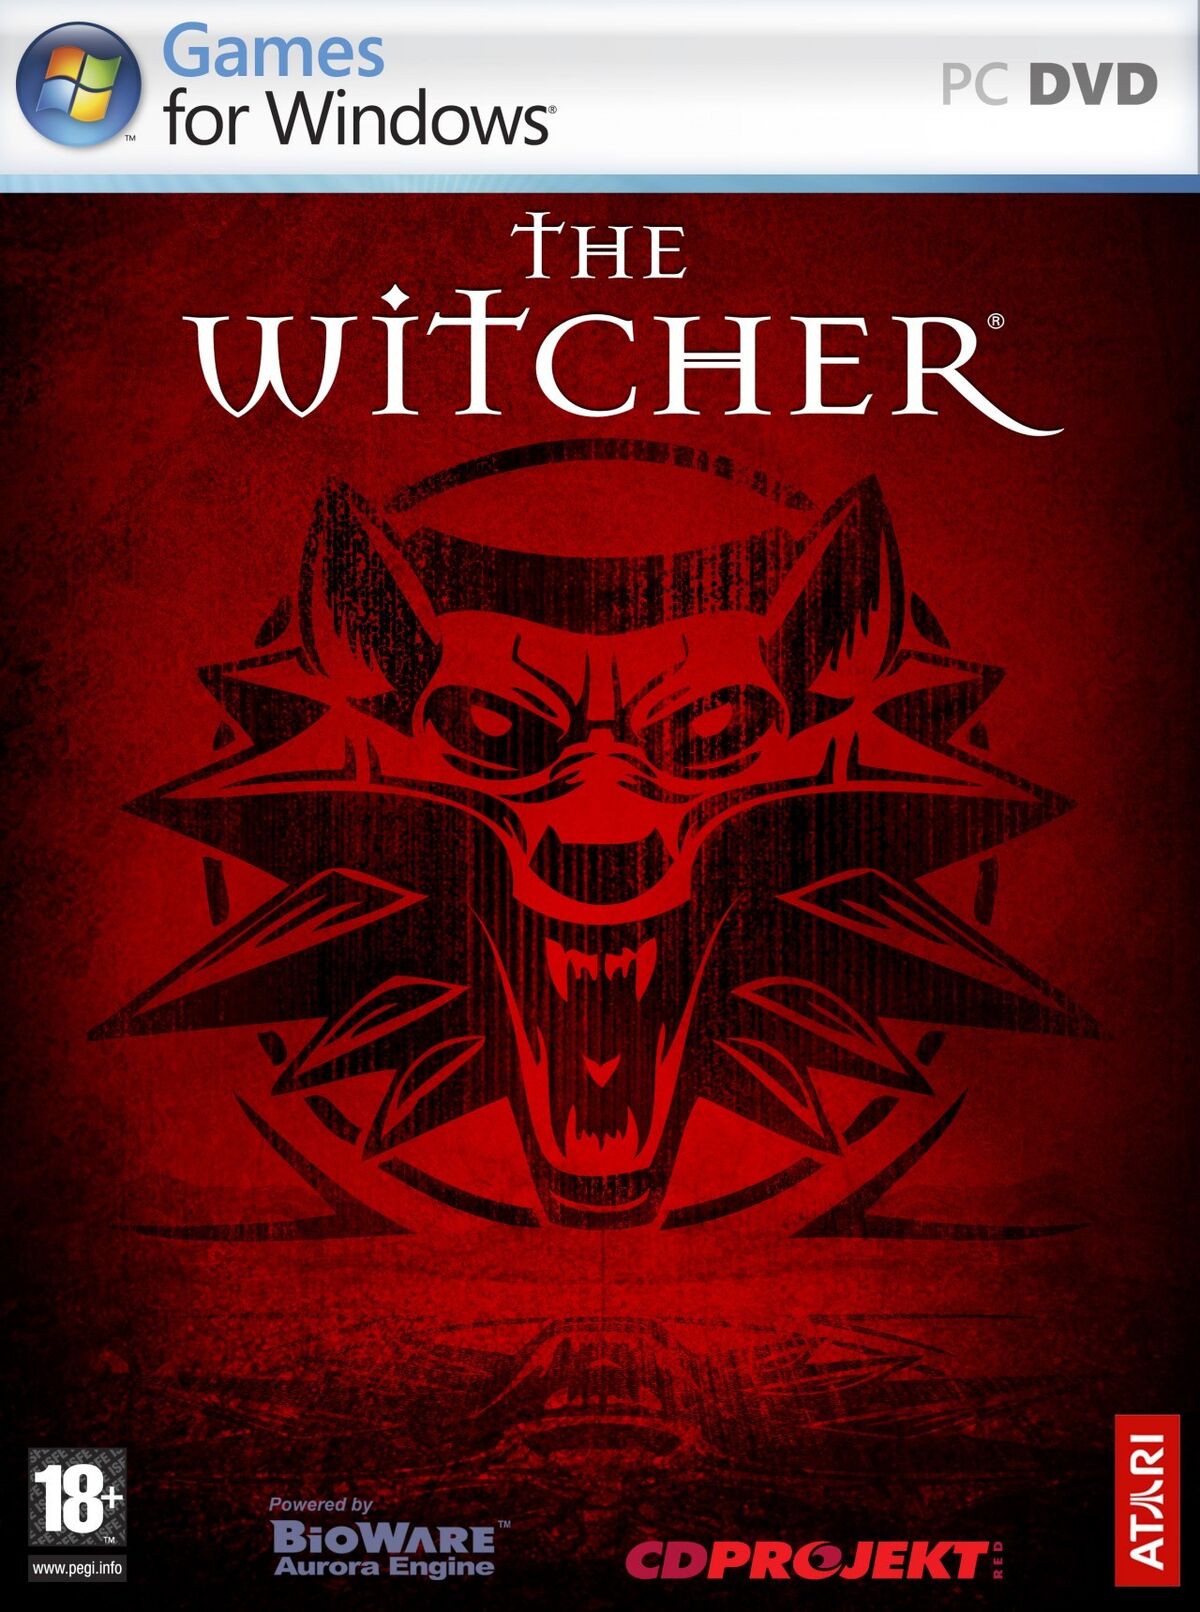 The Witcher (game) | Witcher | Fandom